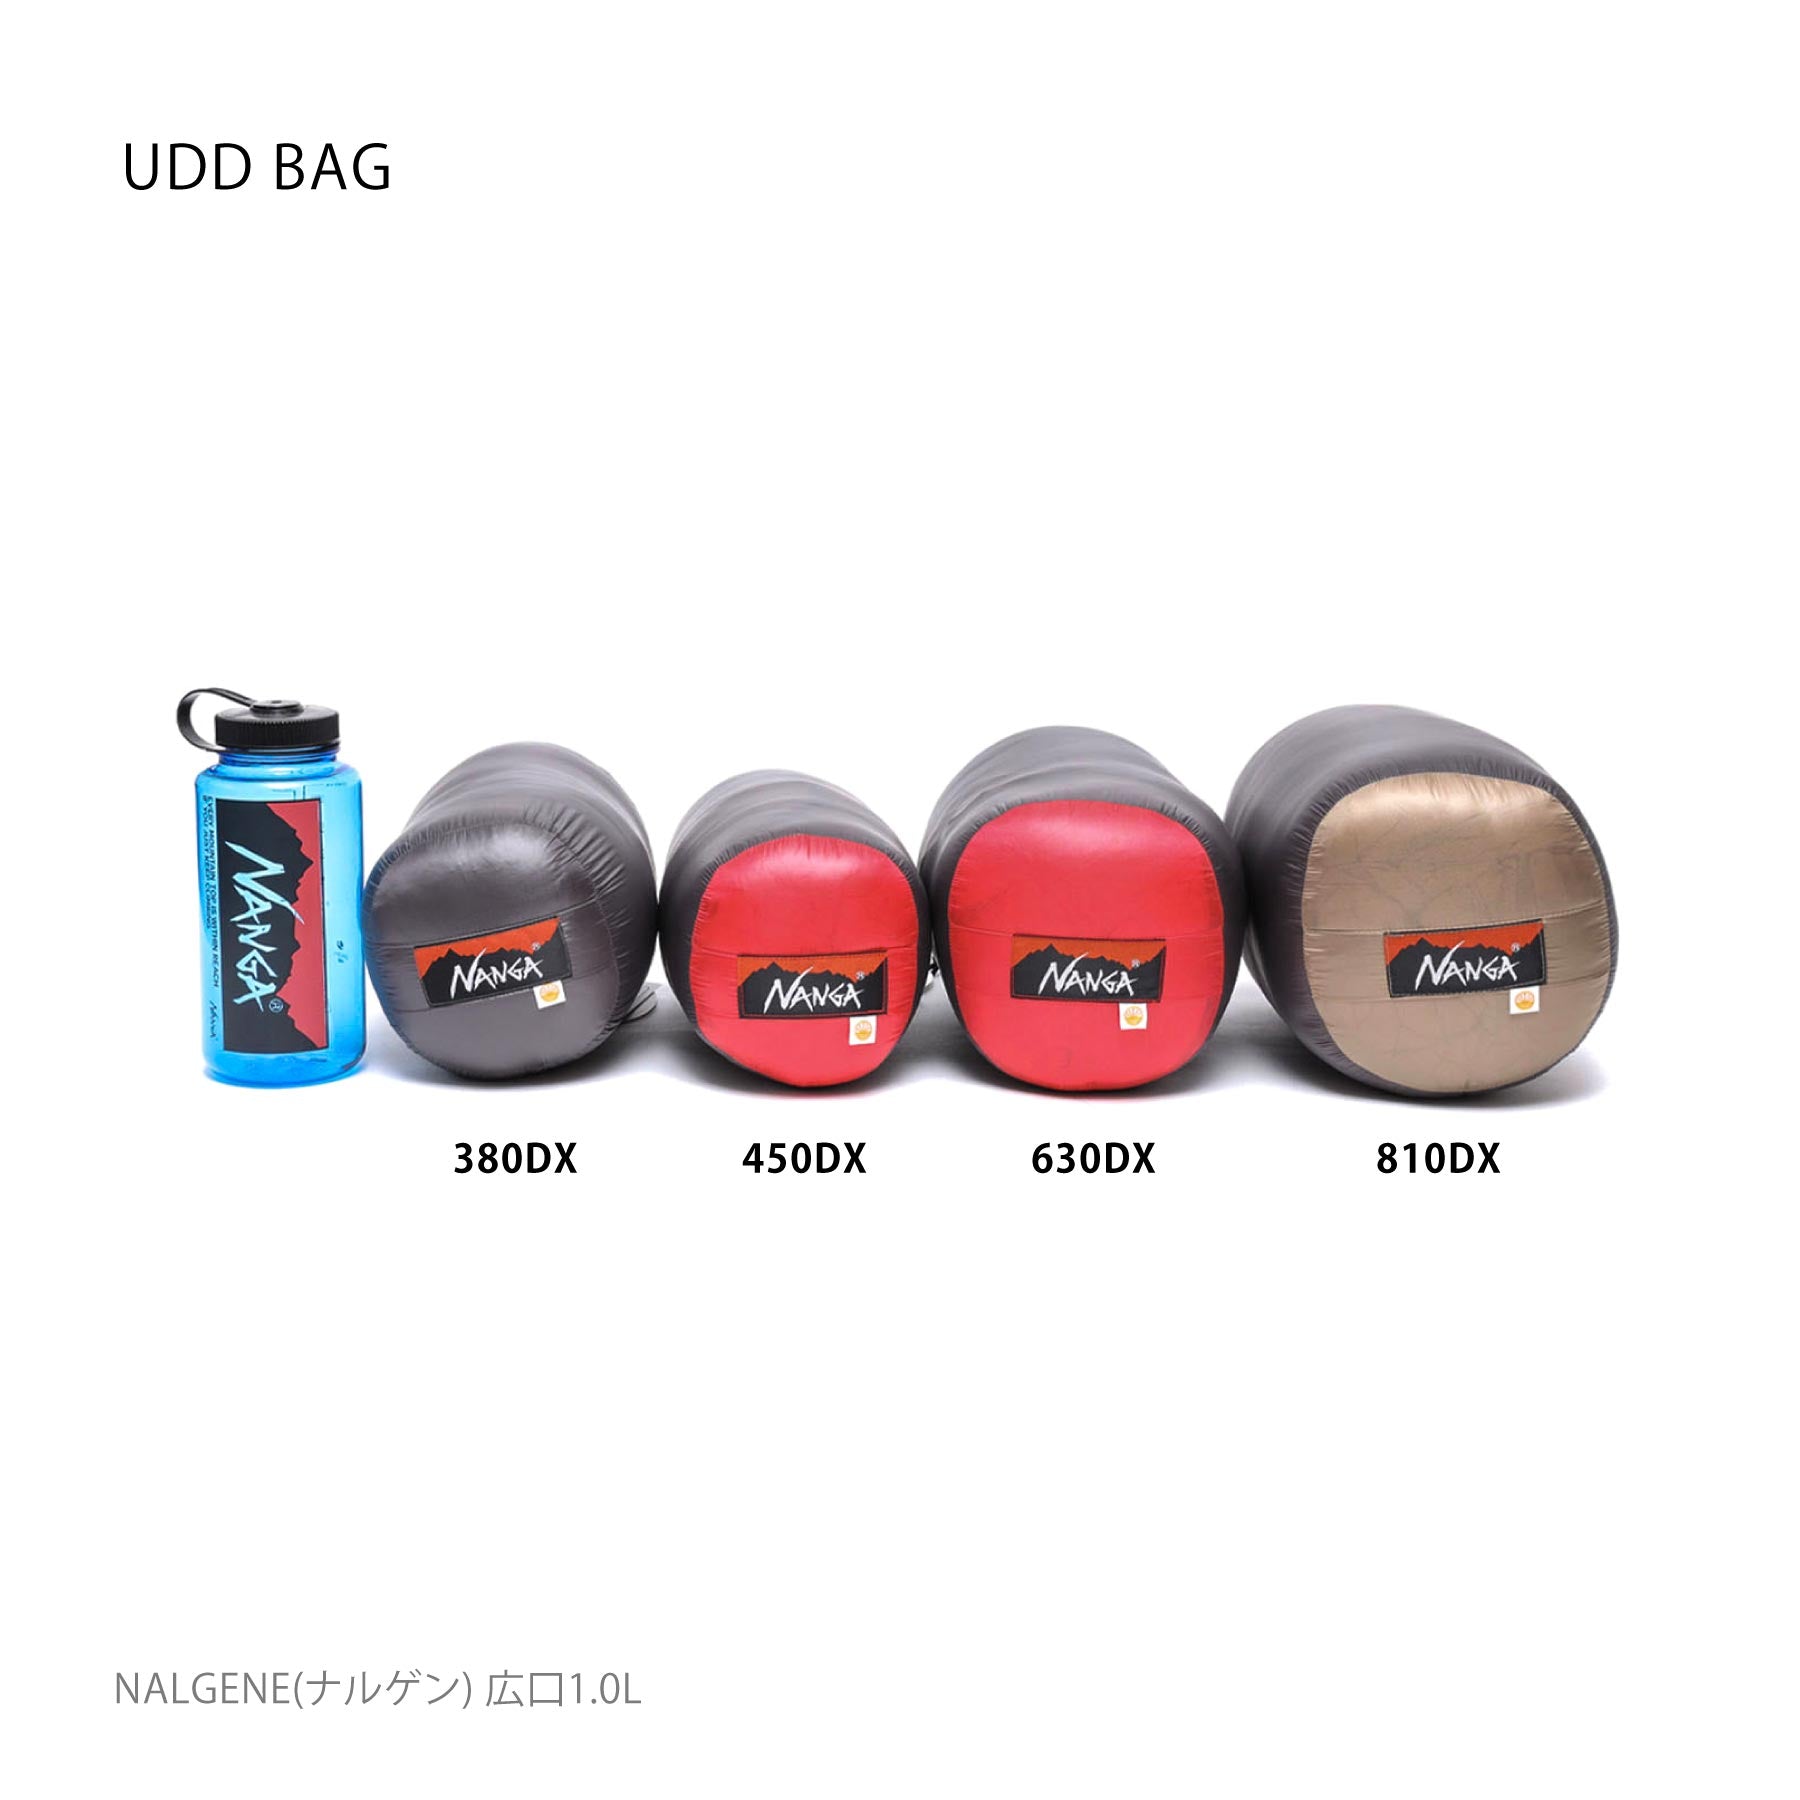 UDD BAG 630DX – NANGA ONLINE SHOP